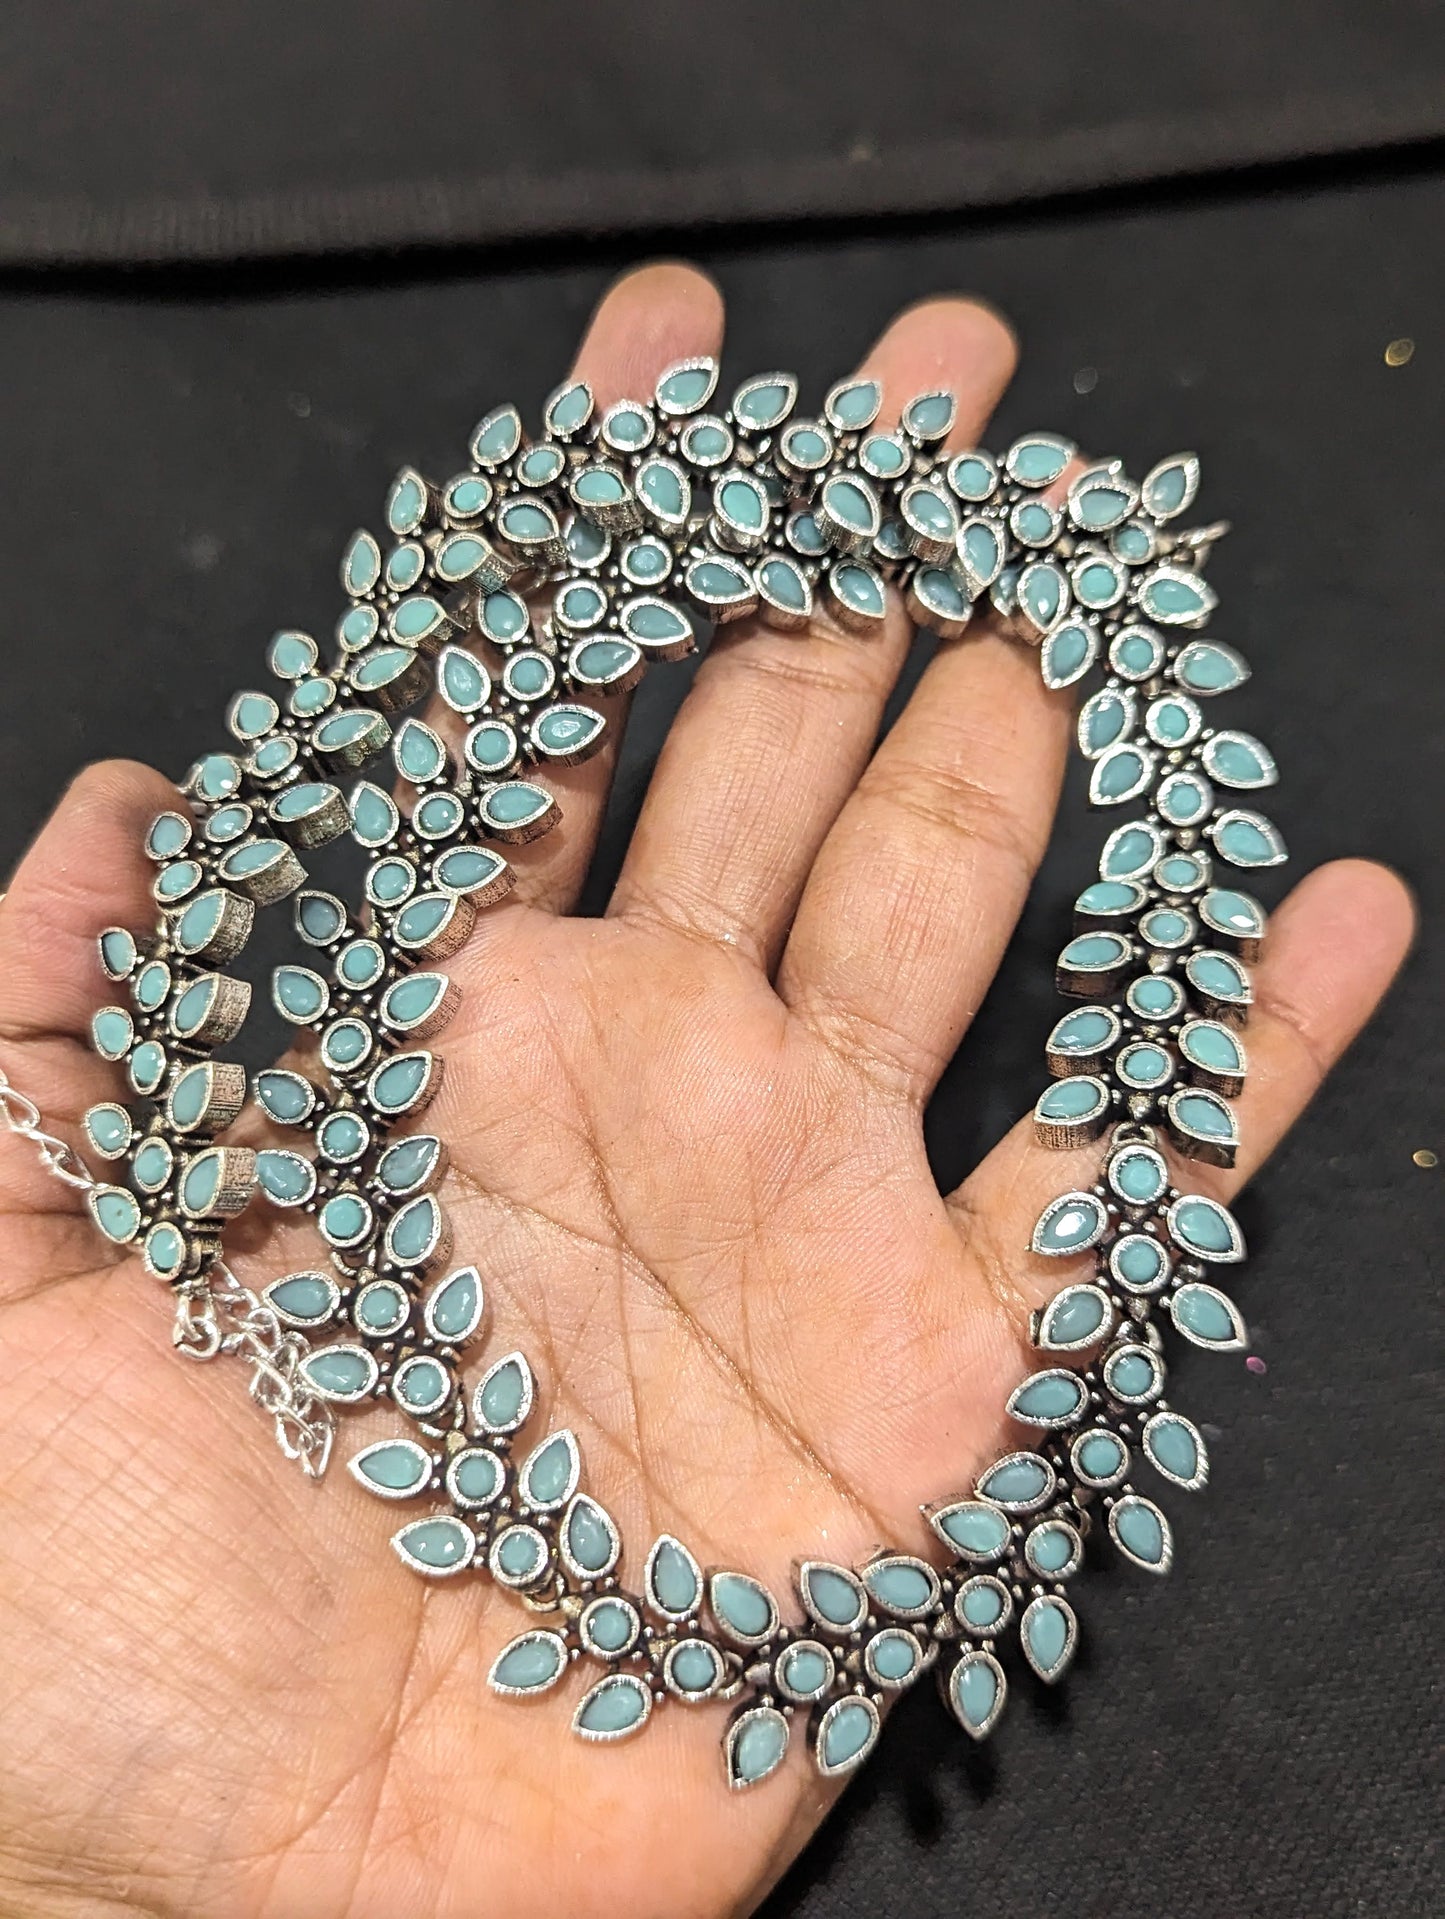 Oxidized Silver Leaf Polki stone Long necklace and jhumka set